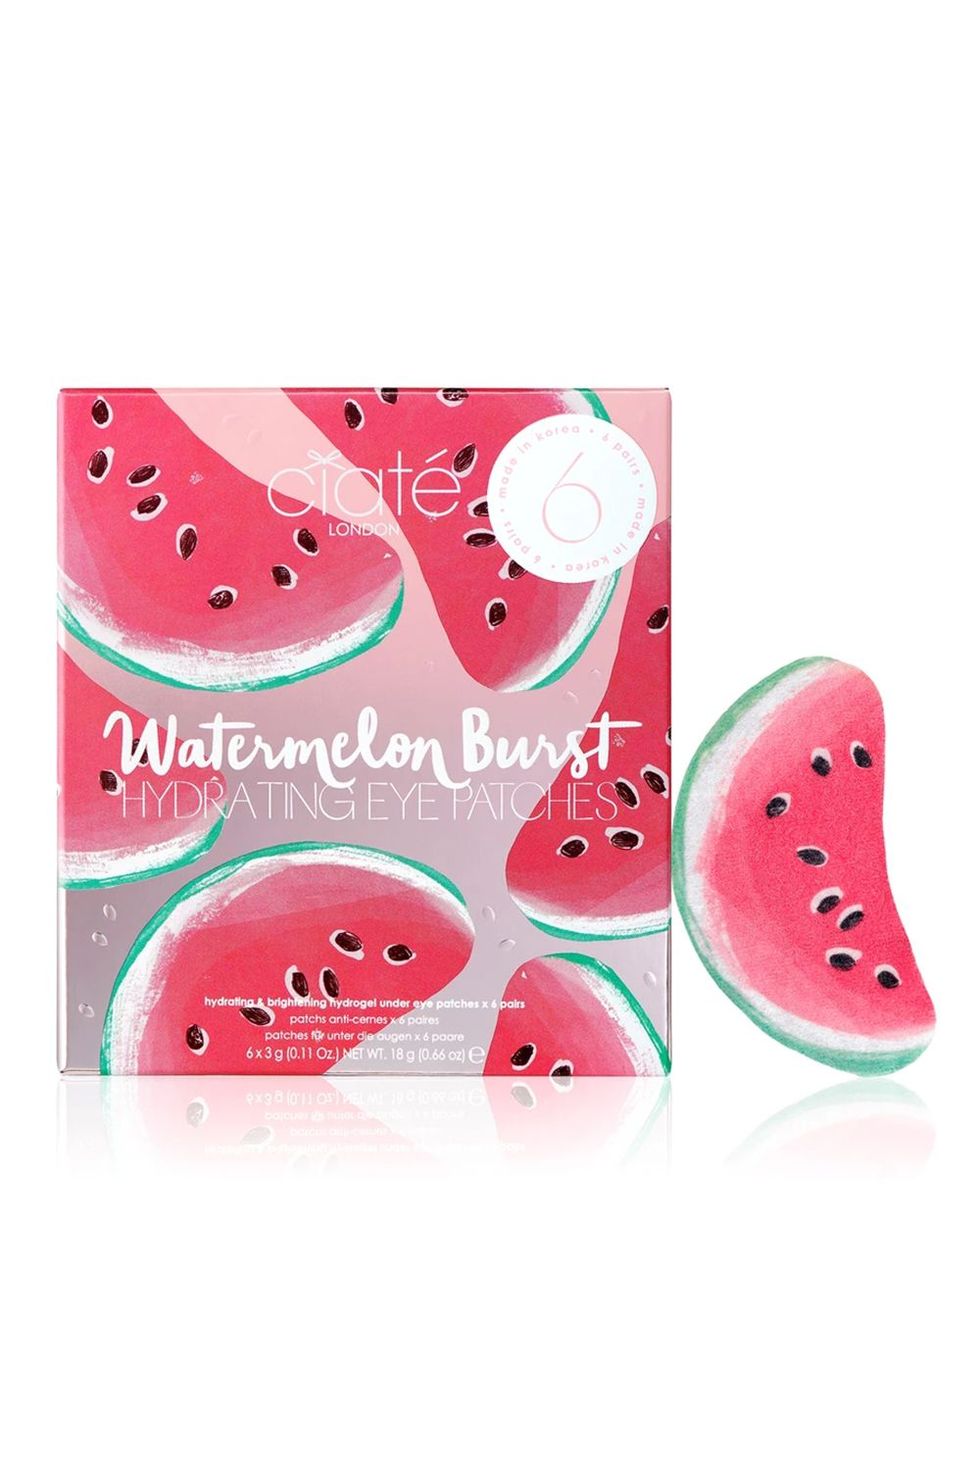 Ciaté London Watermelon Burst Hydrating Eye Patches